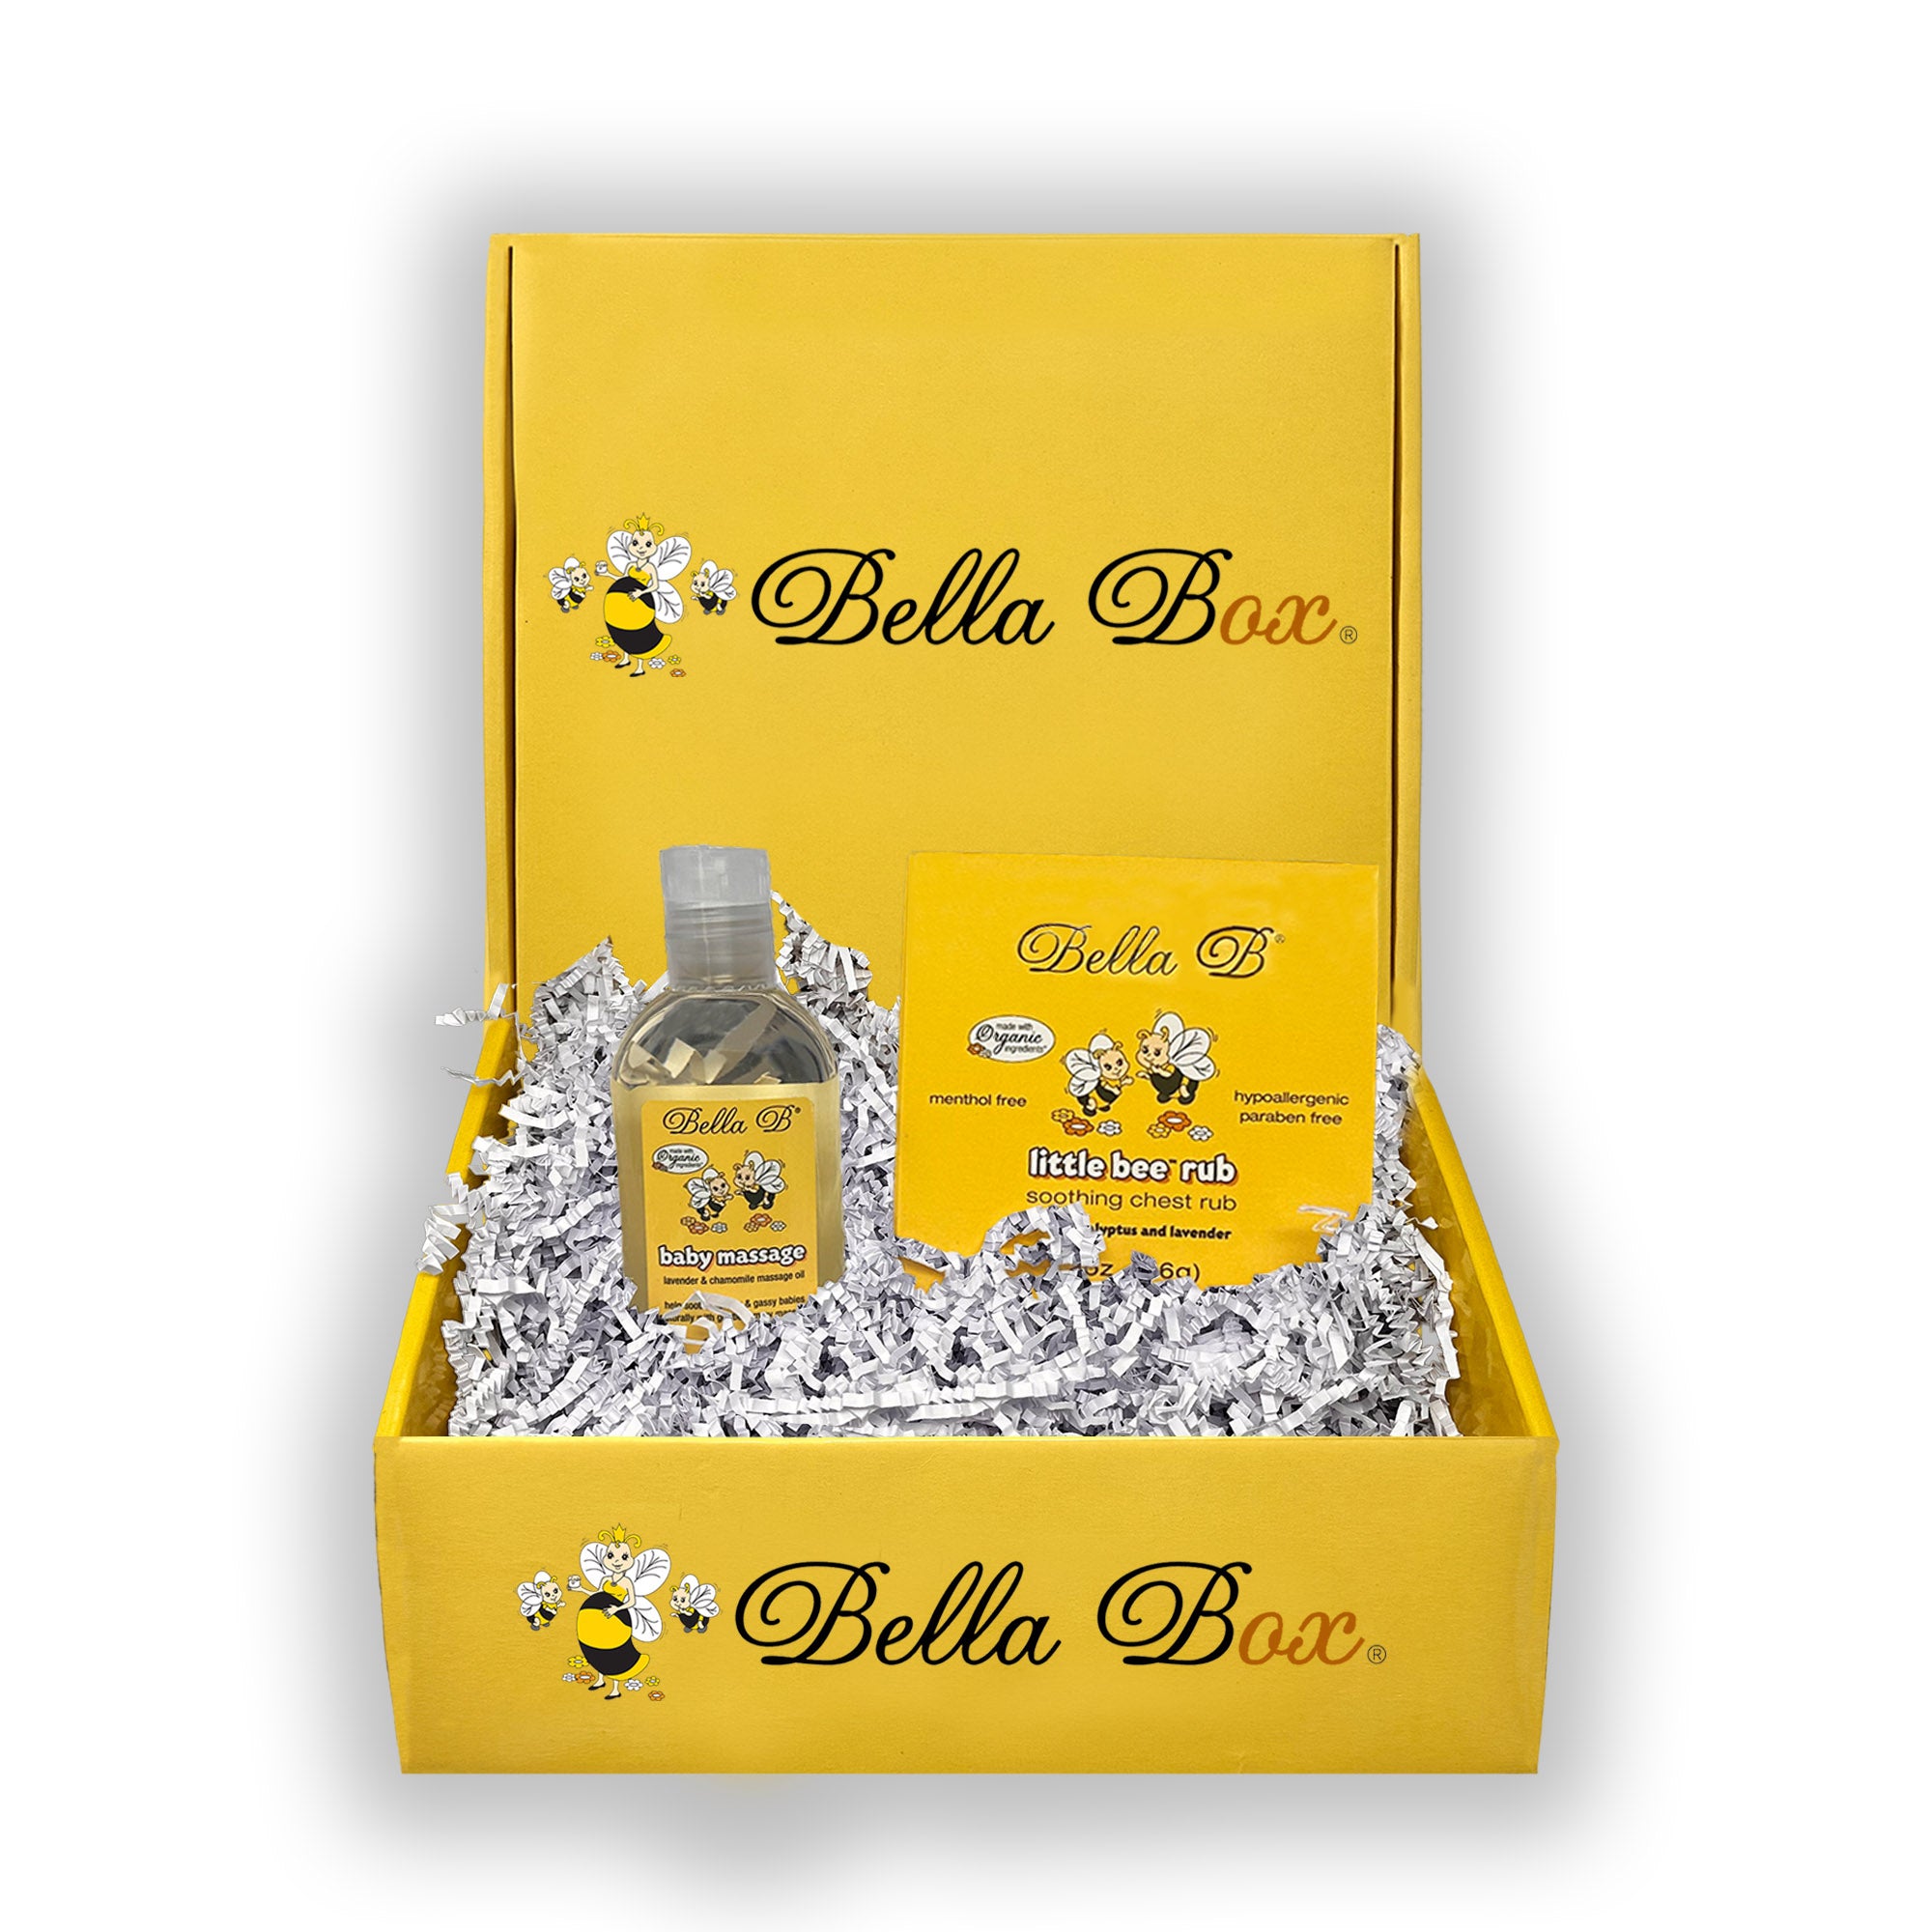 Bella B Gift Set - Little Bee Decongesting Chest Rub 2 oz and Baby Massage Oil 3.3 oz